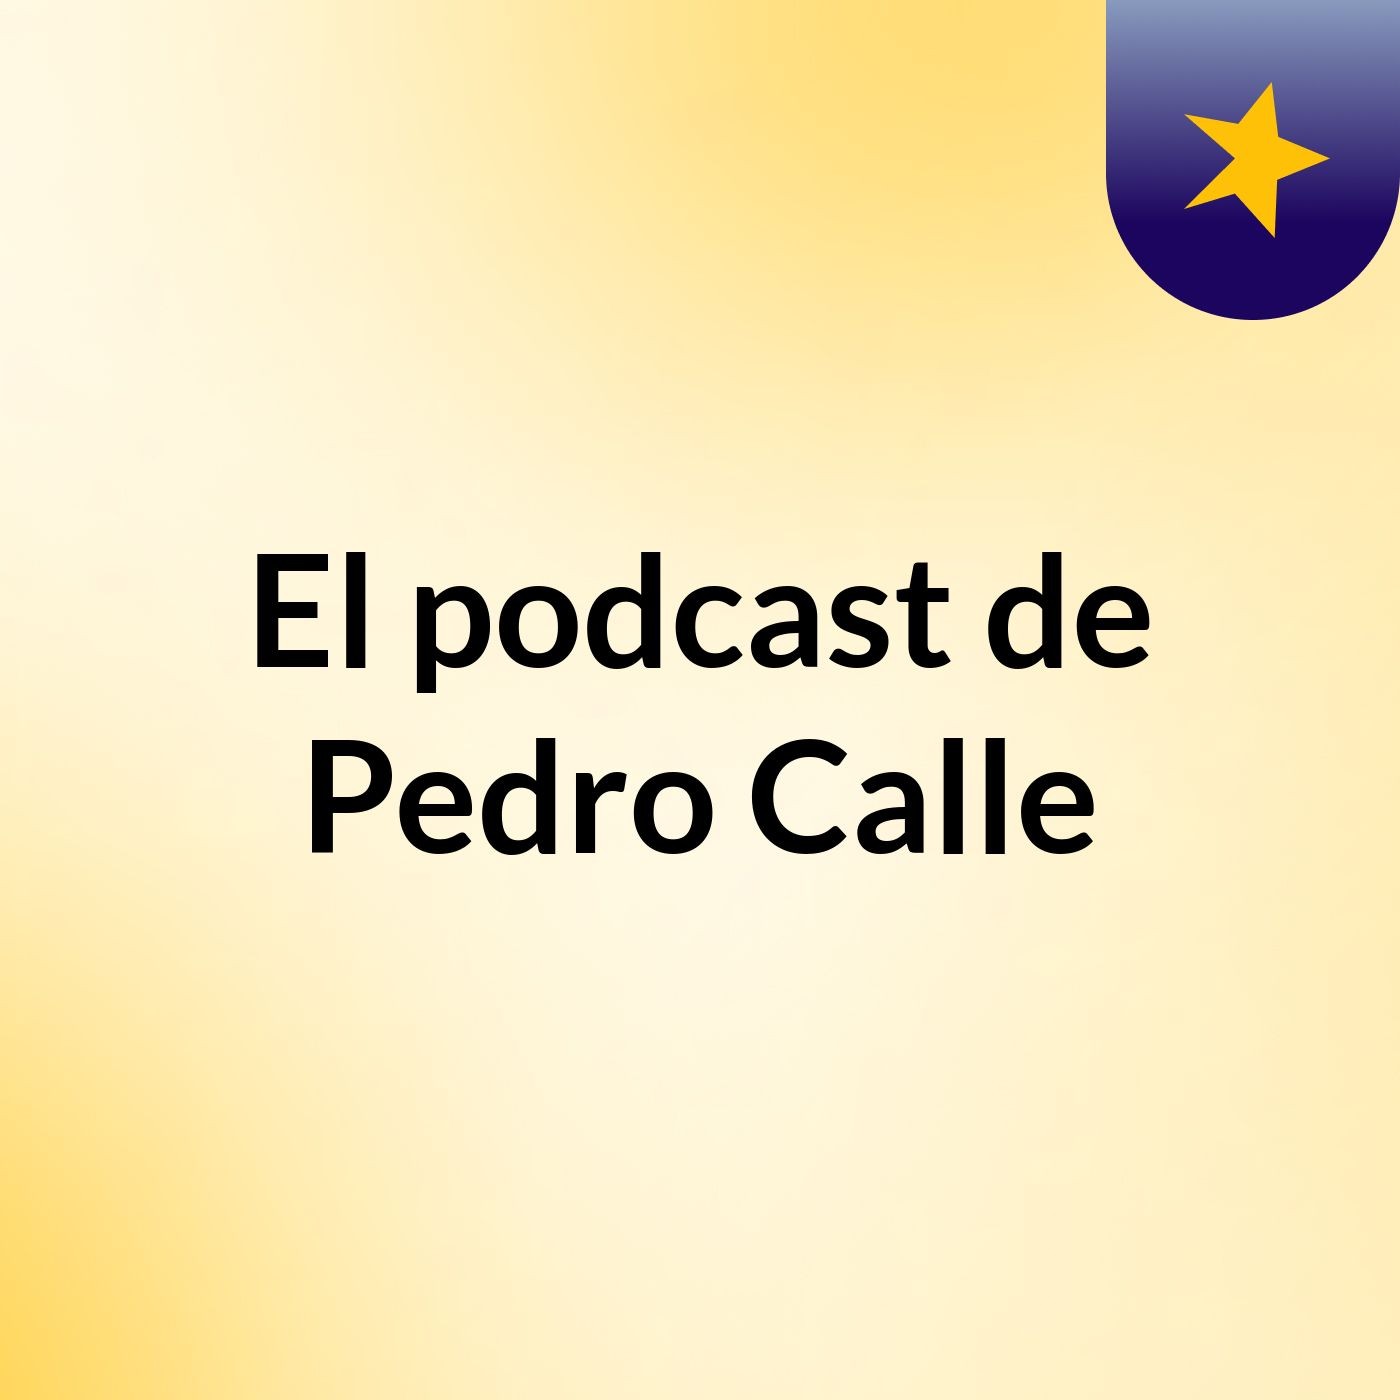 El podcast de Pedro Calle